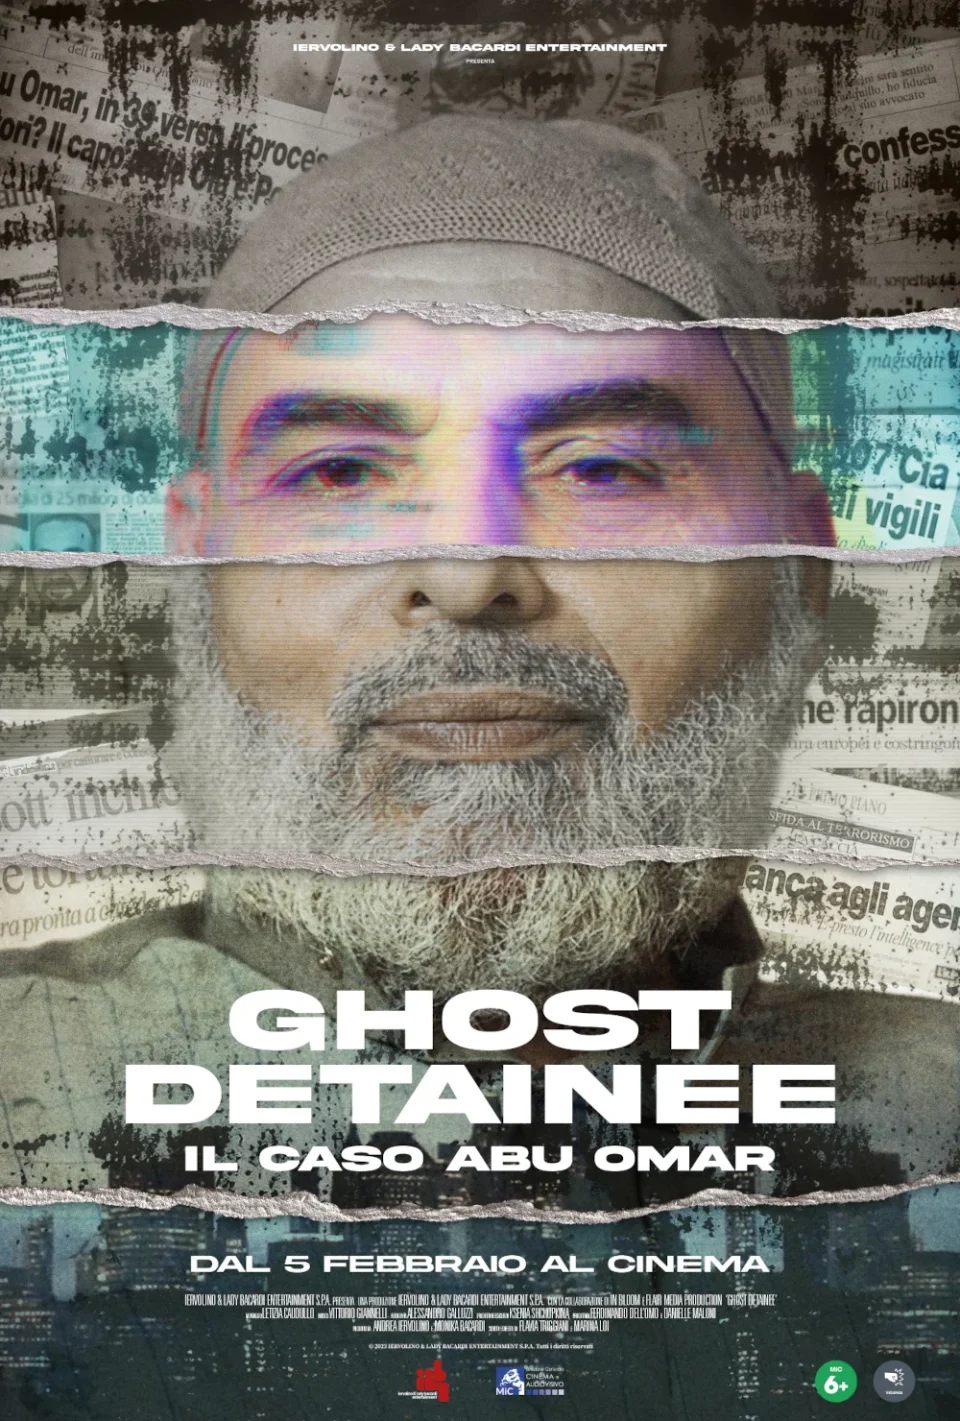 Ghost Detainee - Il caso Abu Omar Locandina